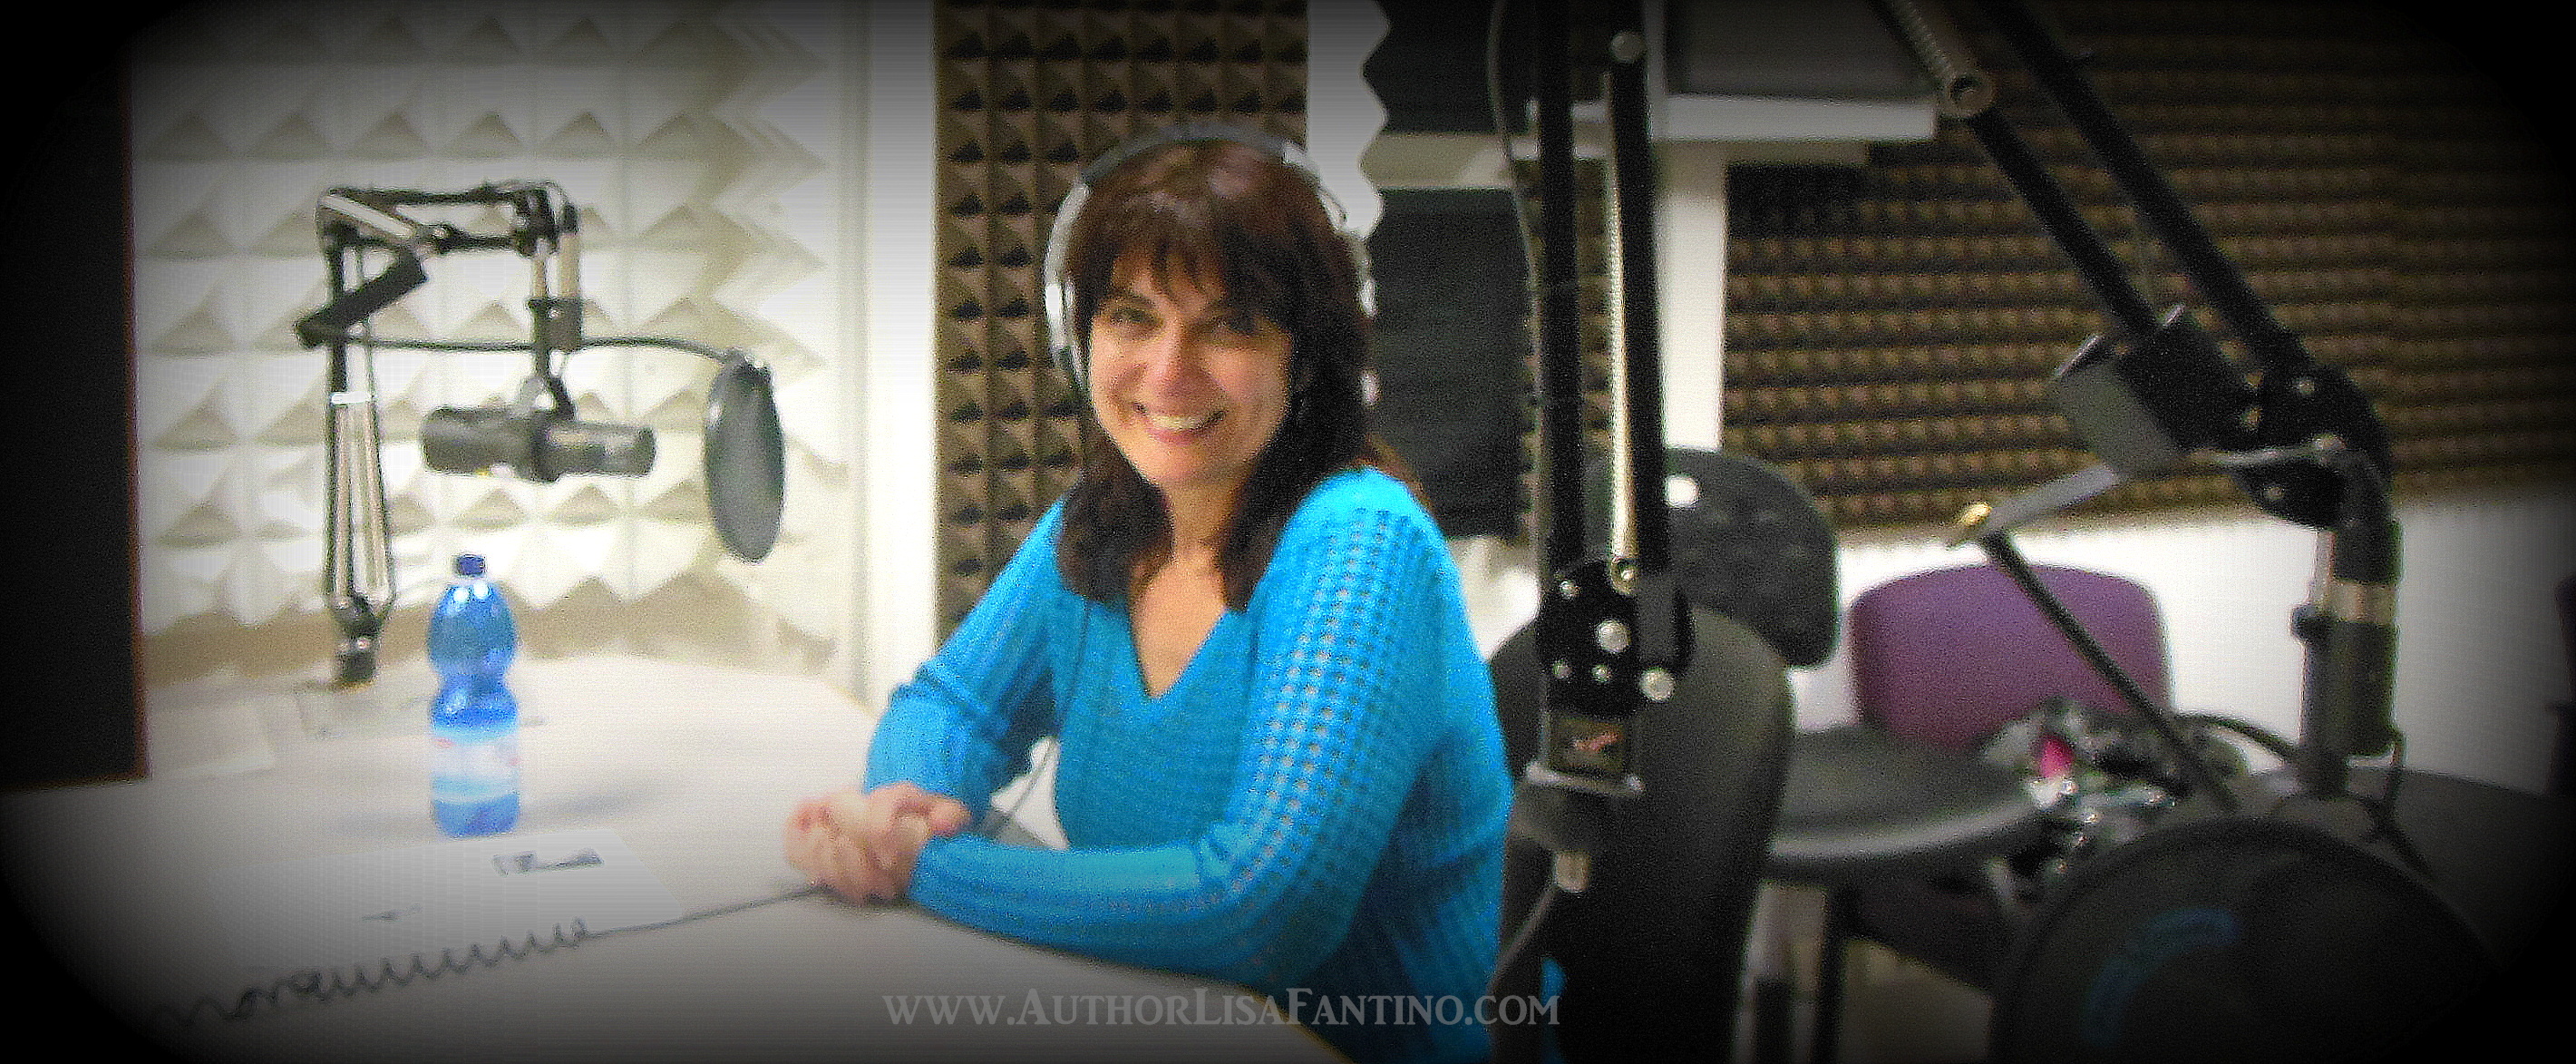 Lisa Fantino on the air